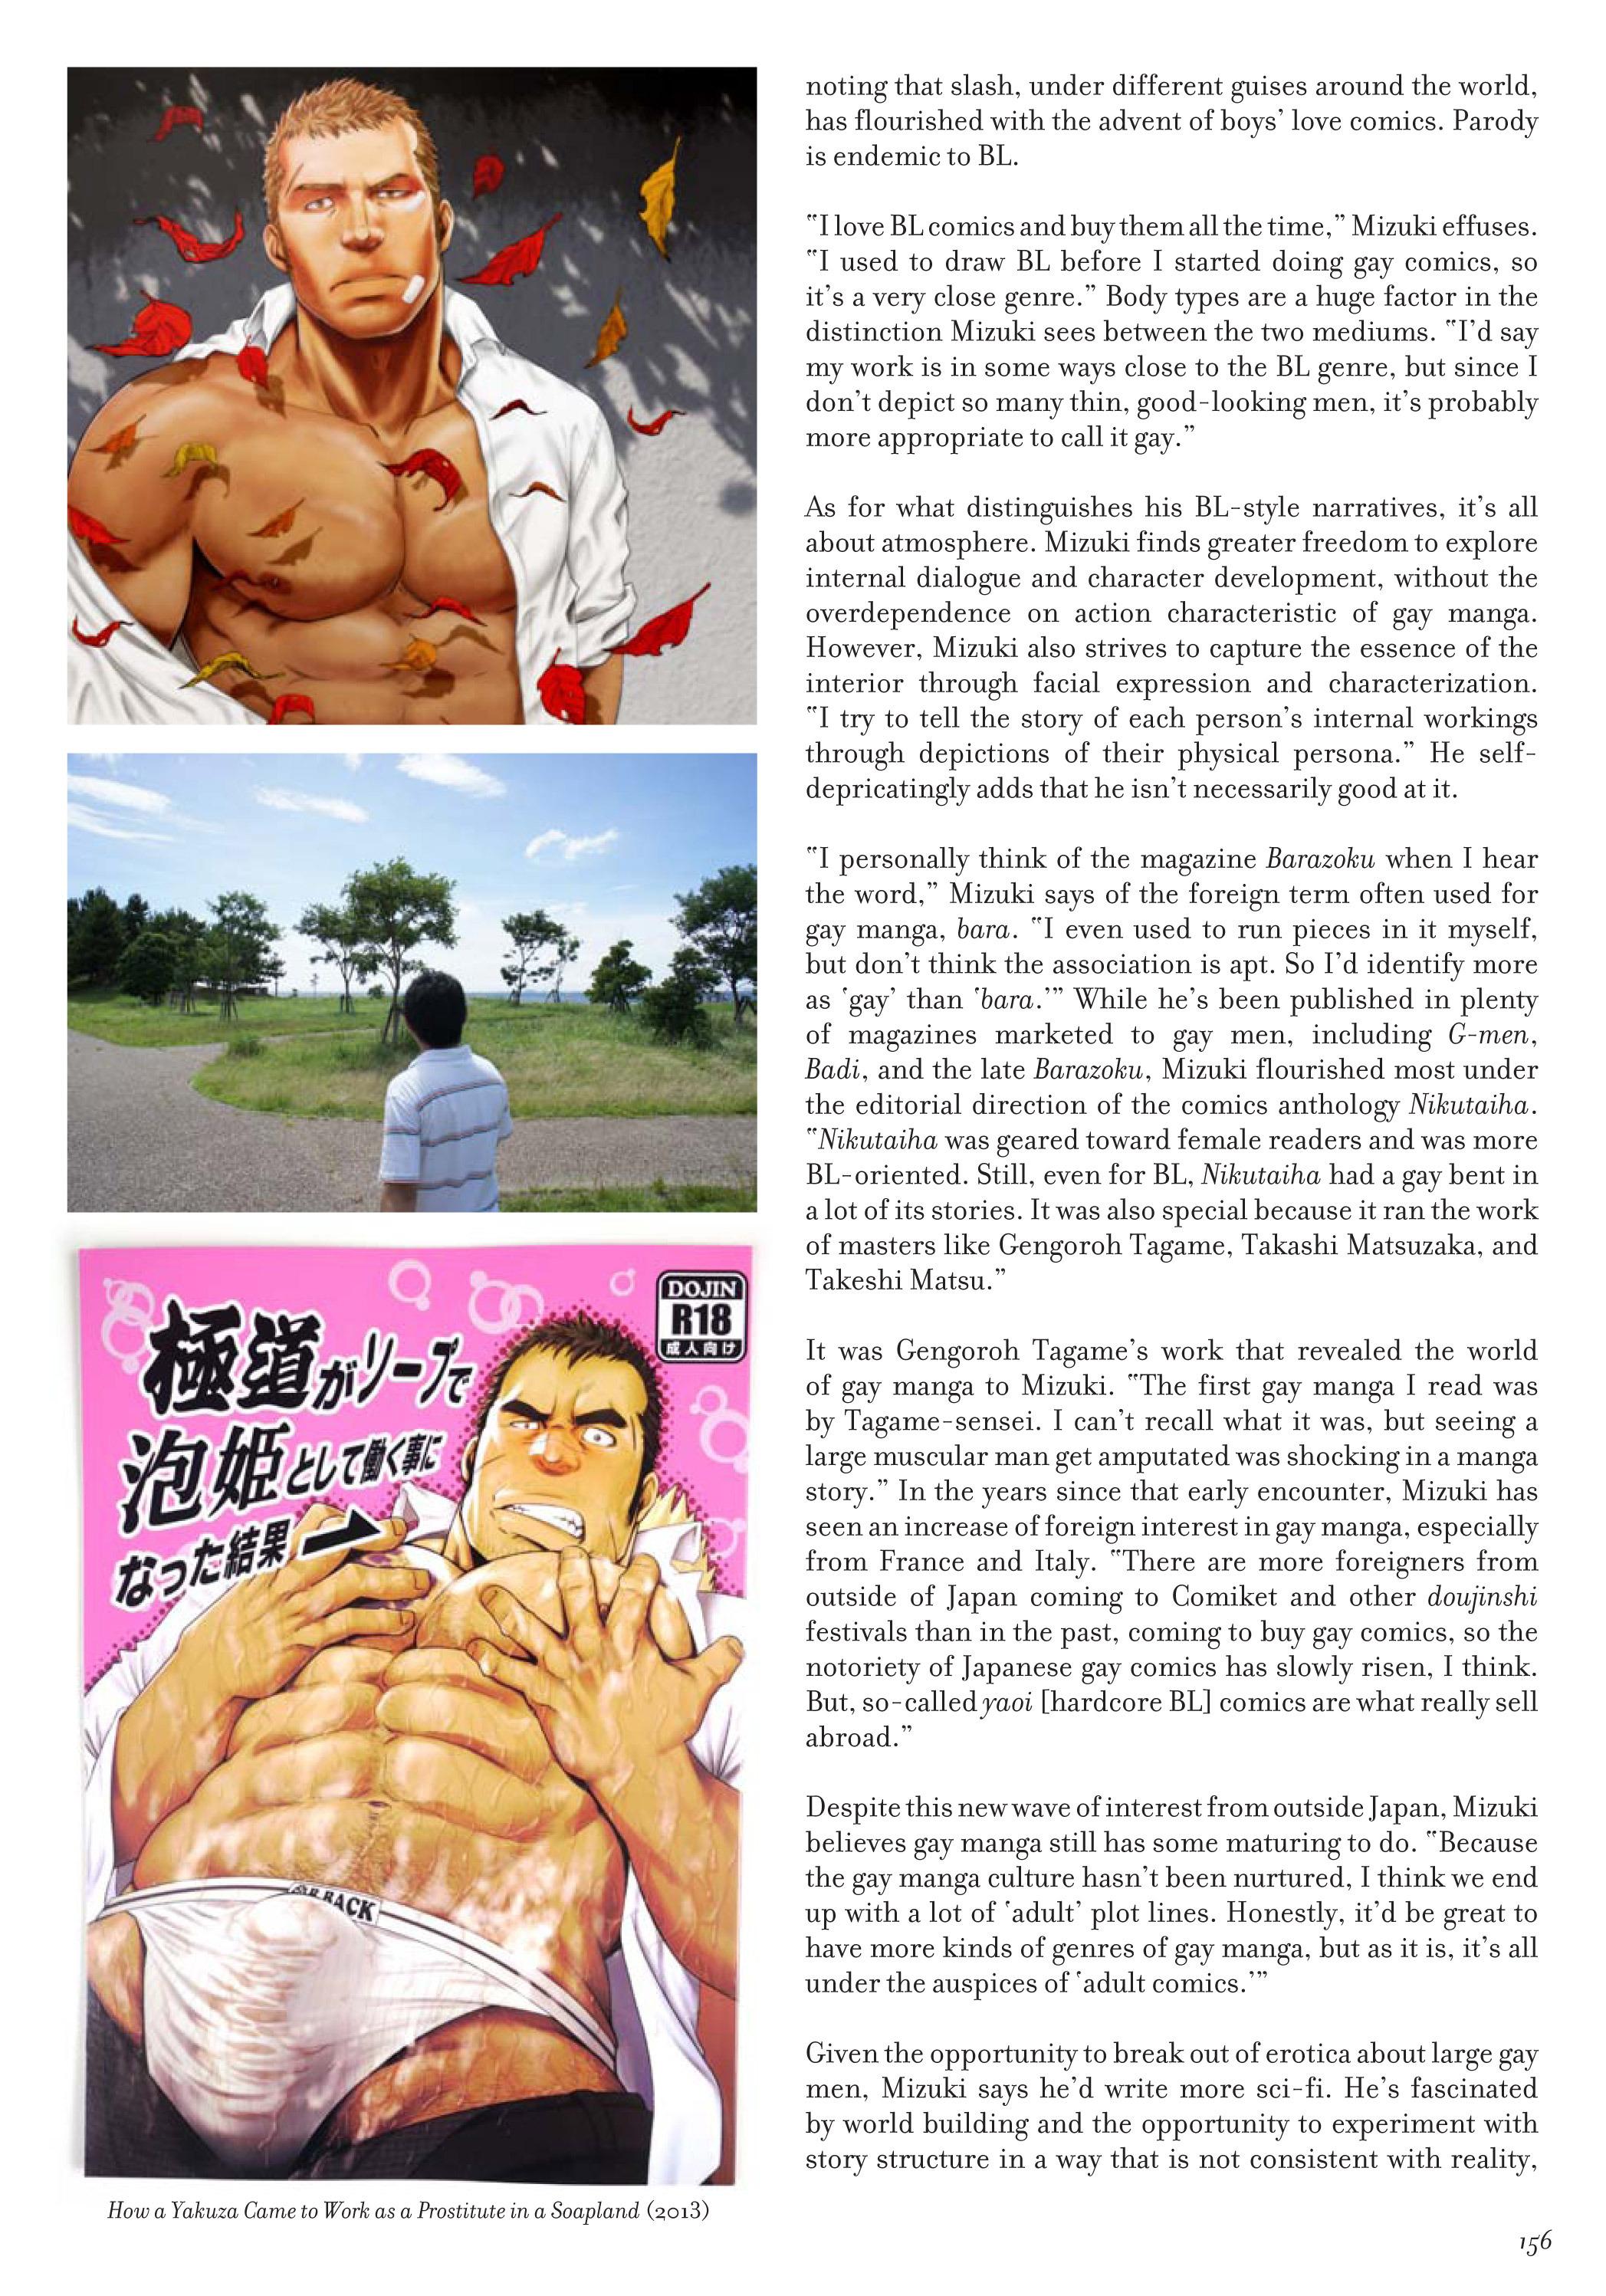 Massive - Gay Manga and the Men Who Make It 155